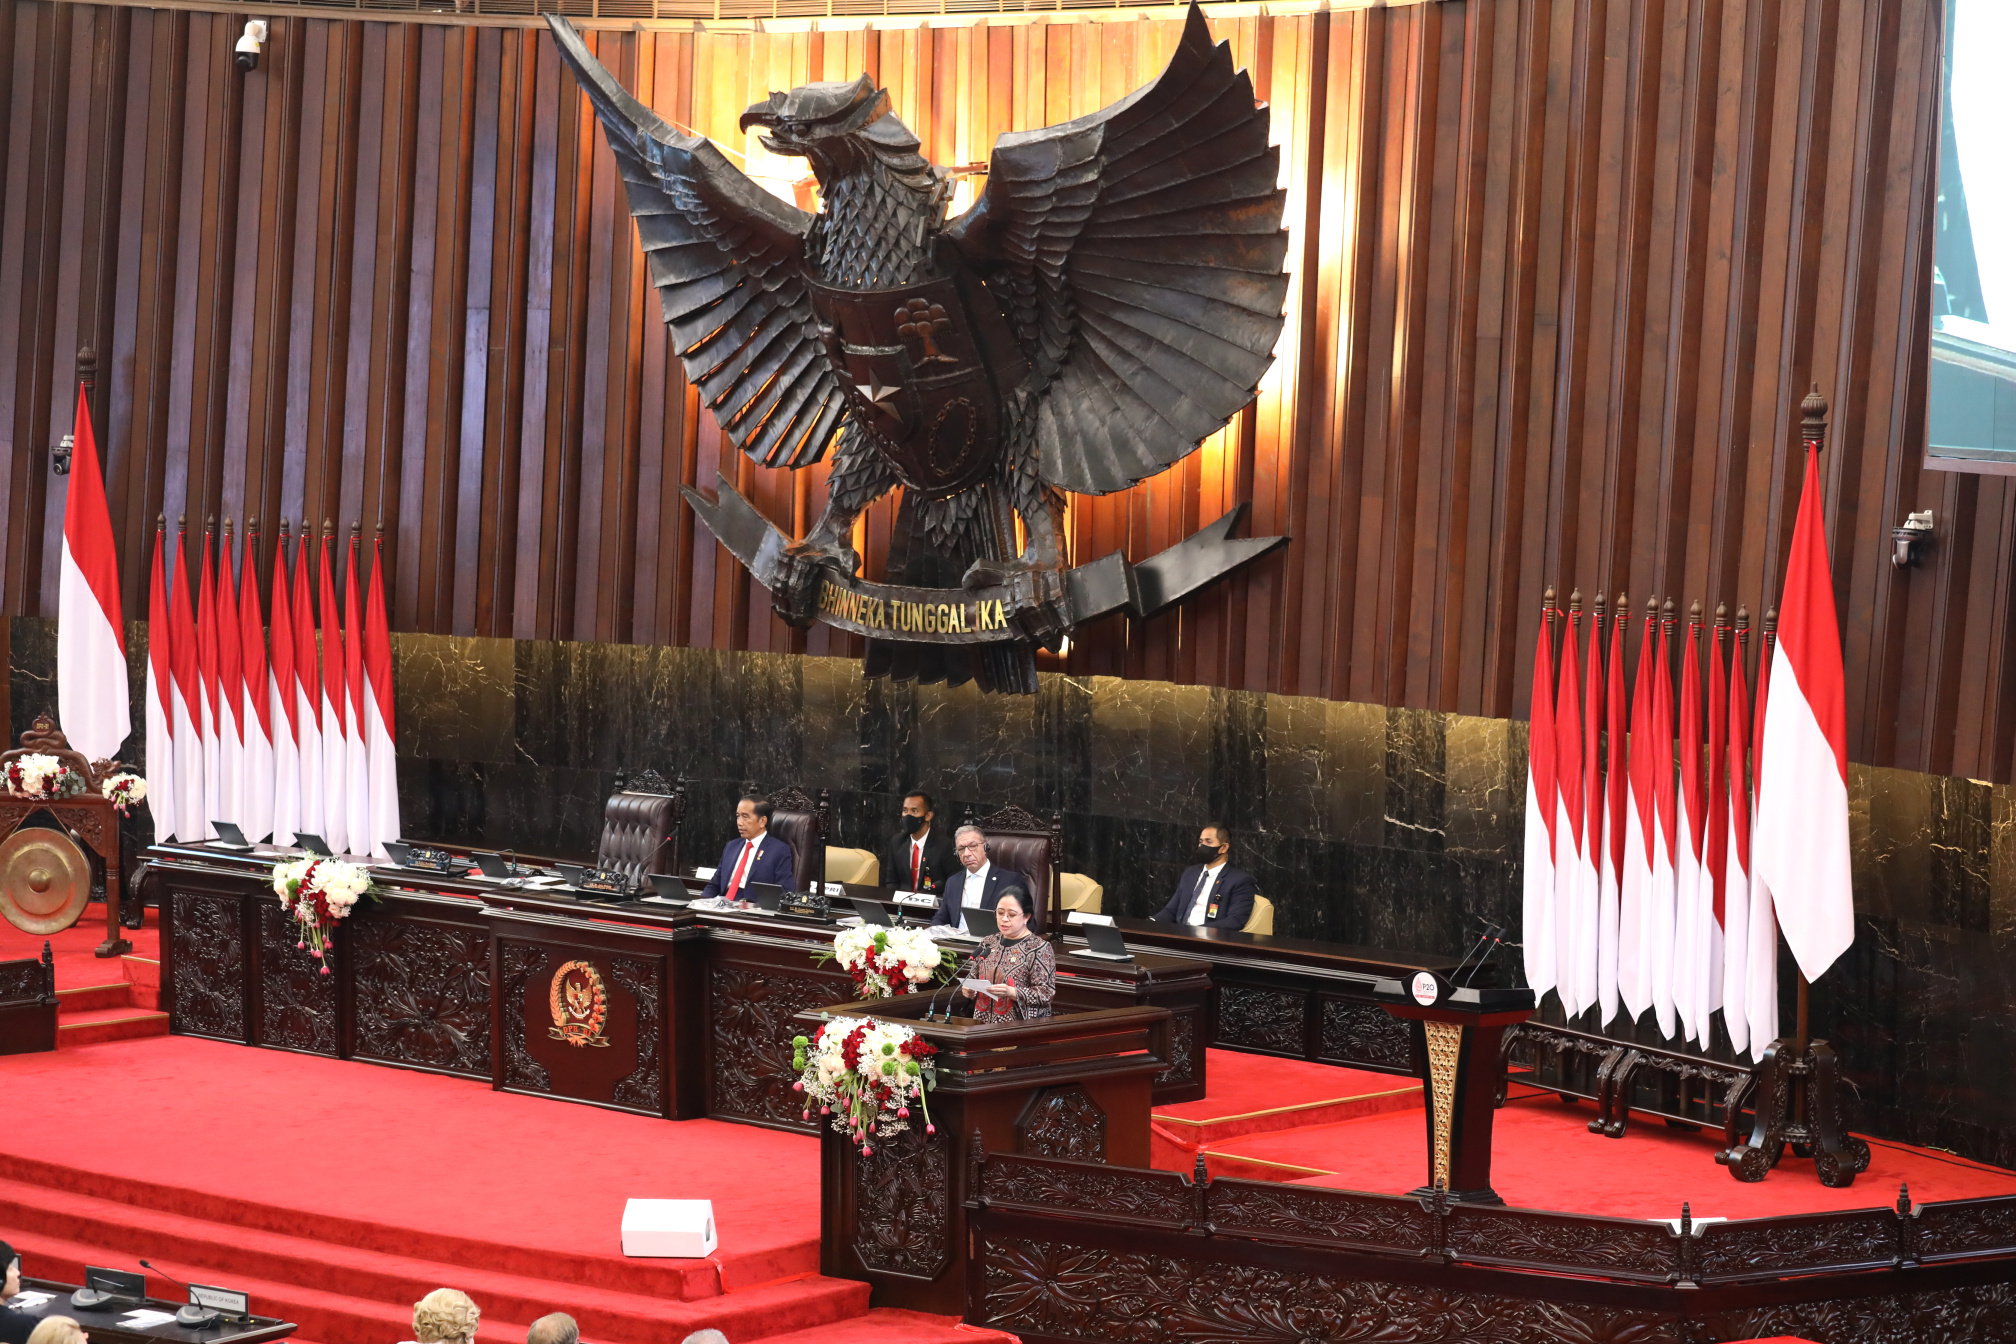 Presiden Jokowi membuka The G20 Parliamentary Speakers' Summit (P20) di Gedung Nusantara DPR RI (Ashar/SinPo.id)